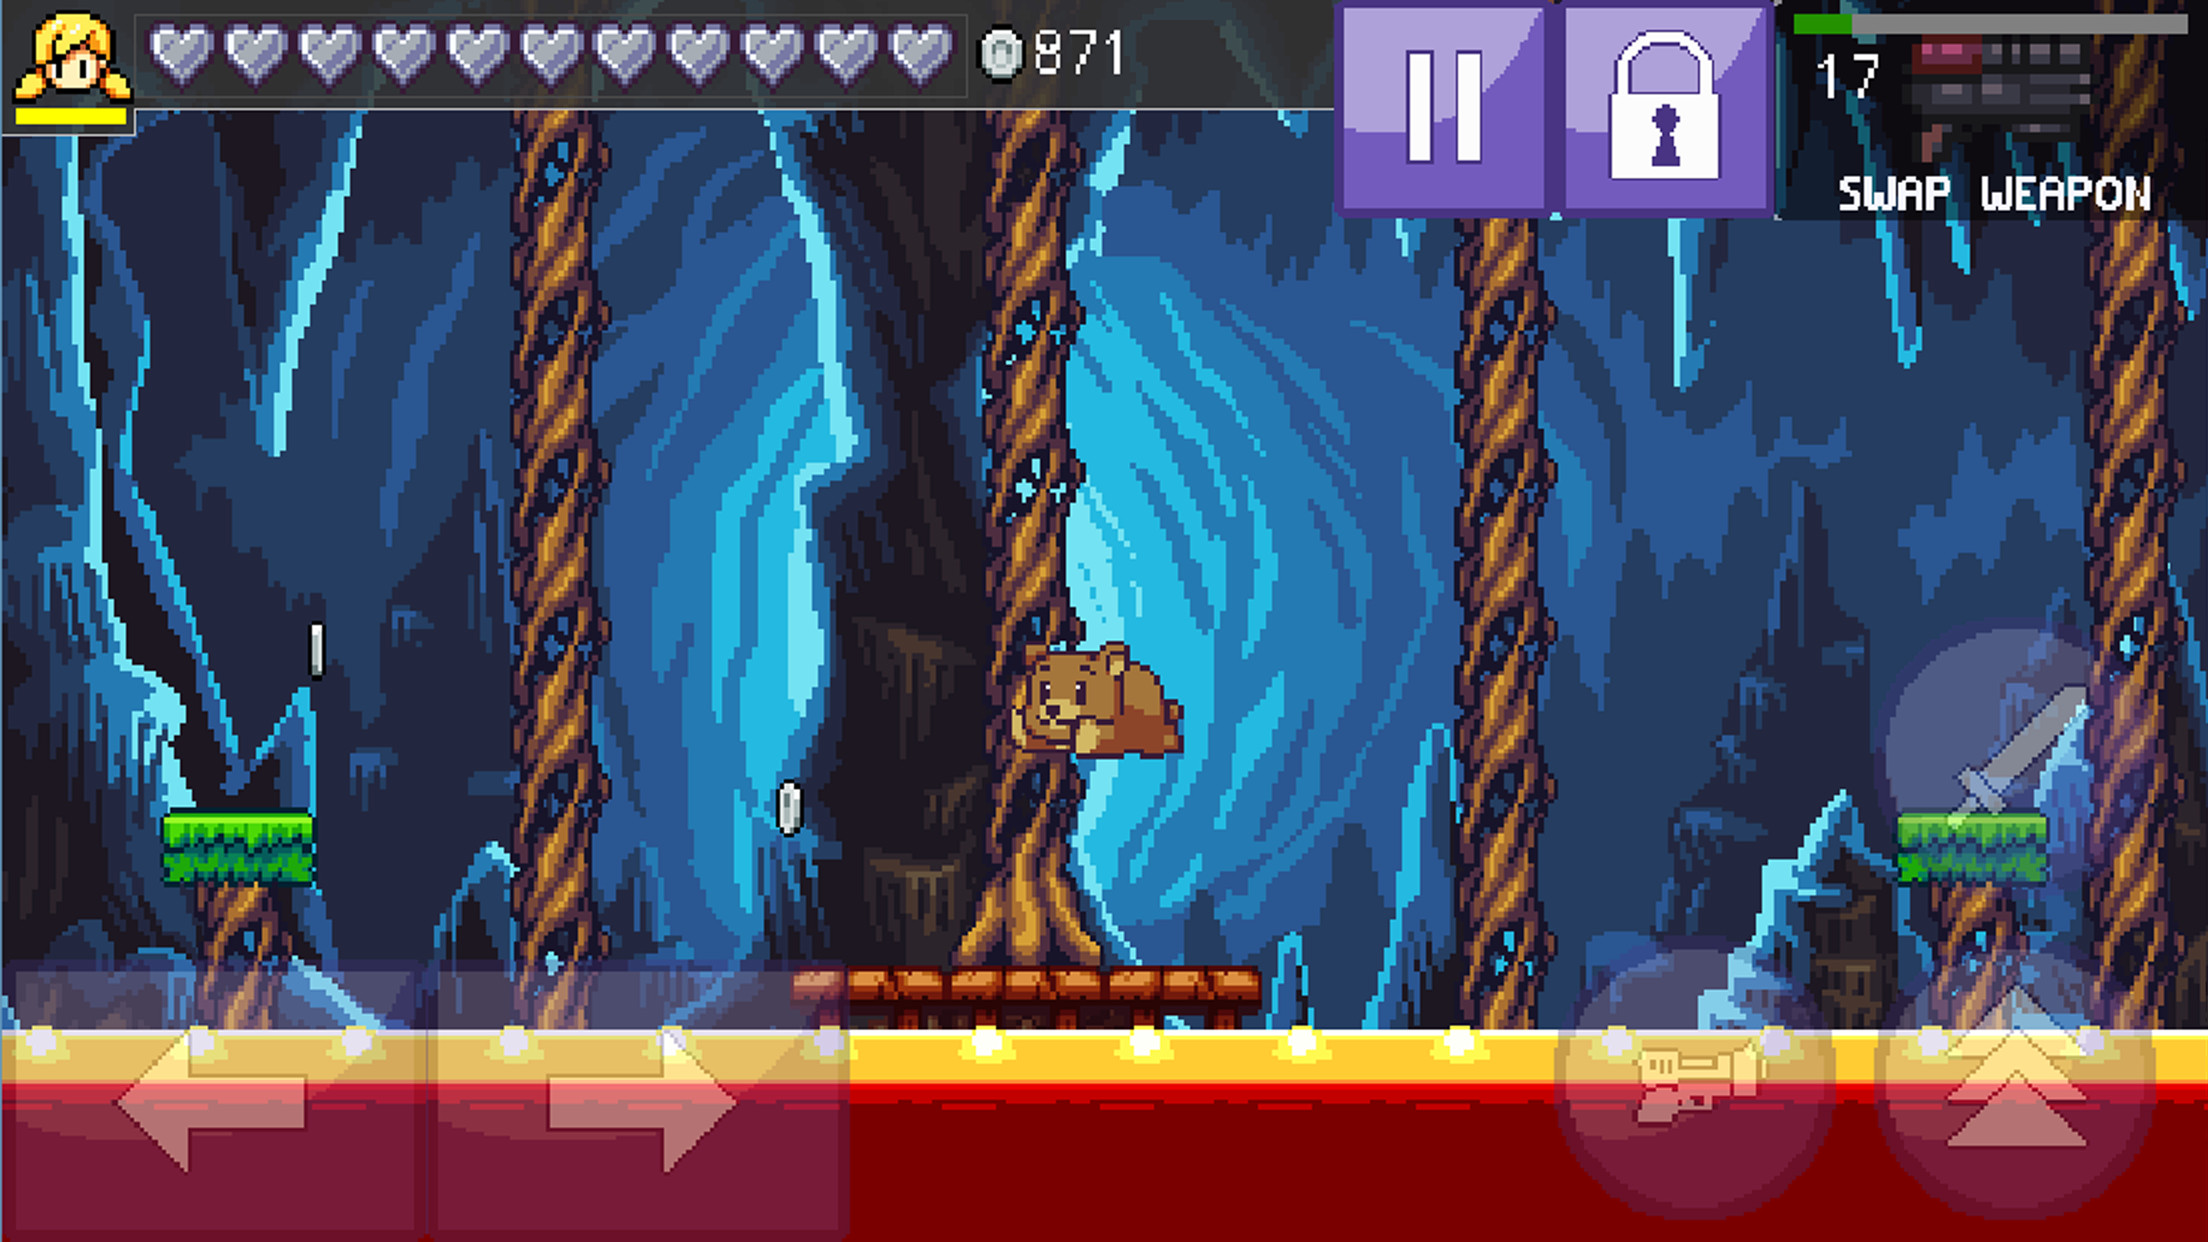 Screenshot of Cally's Caves 3